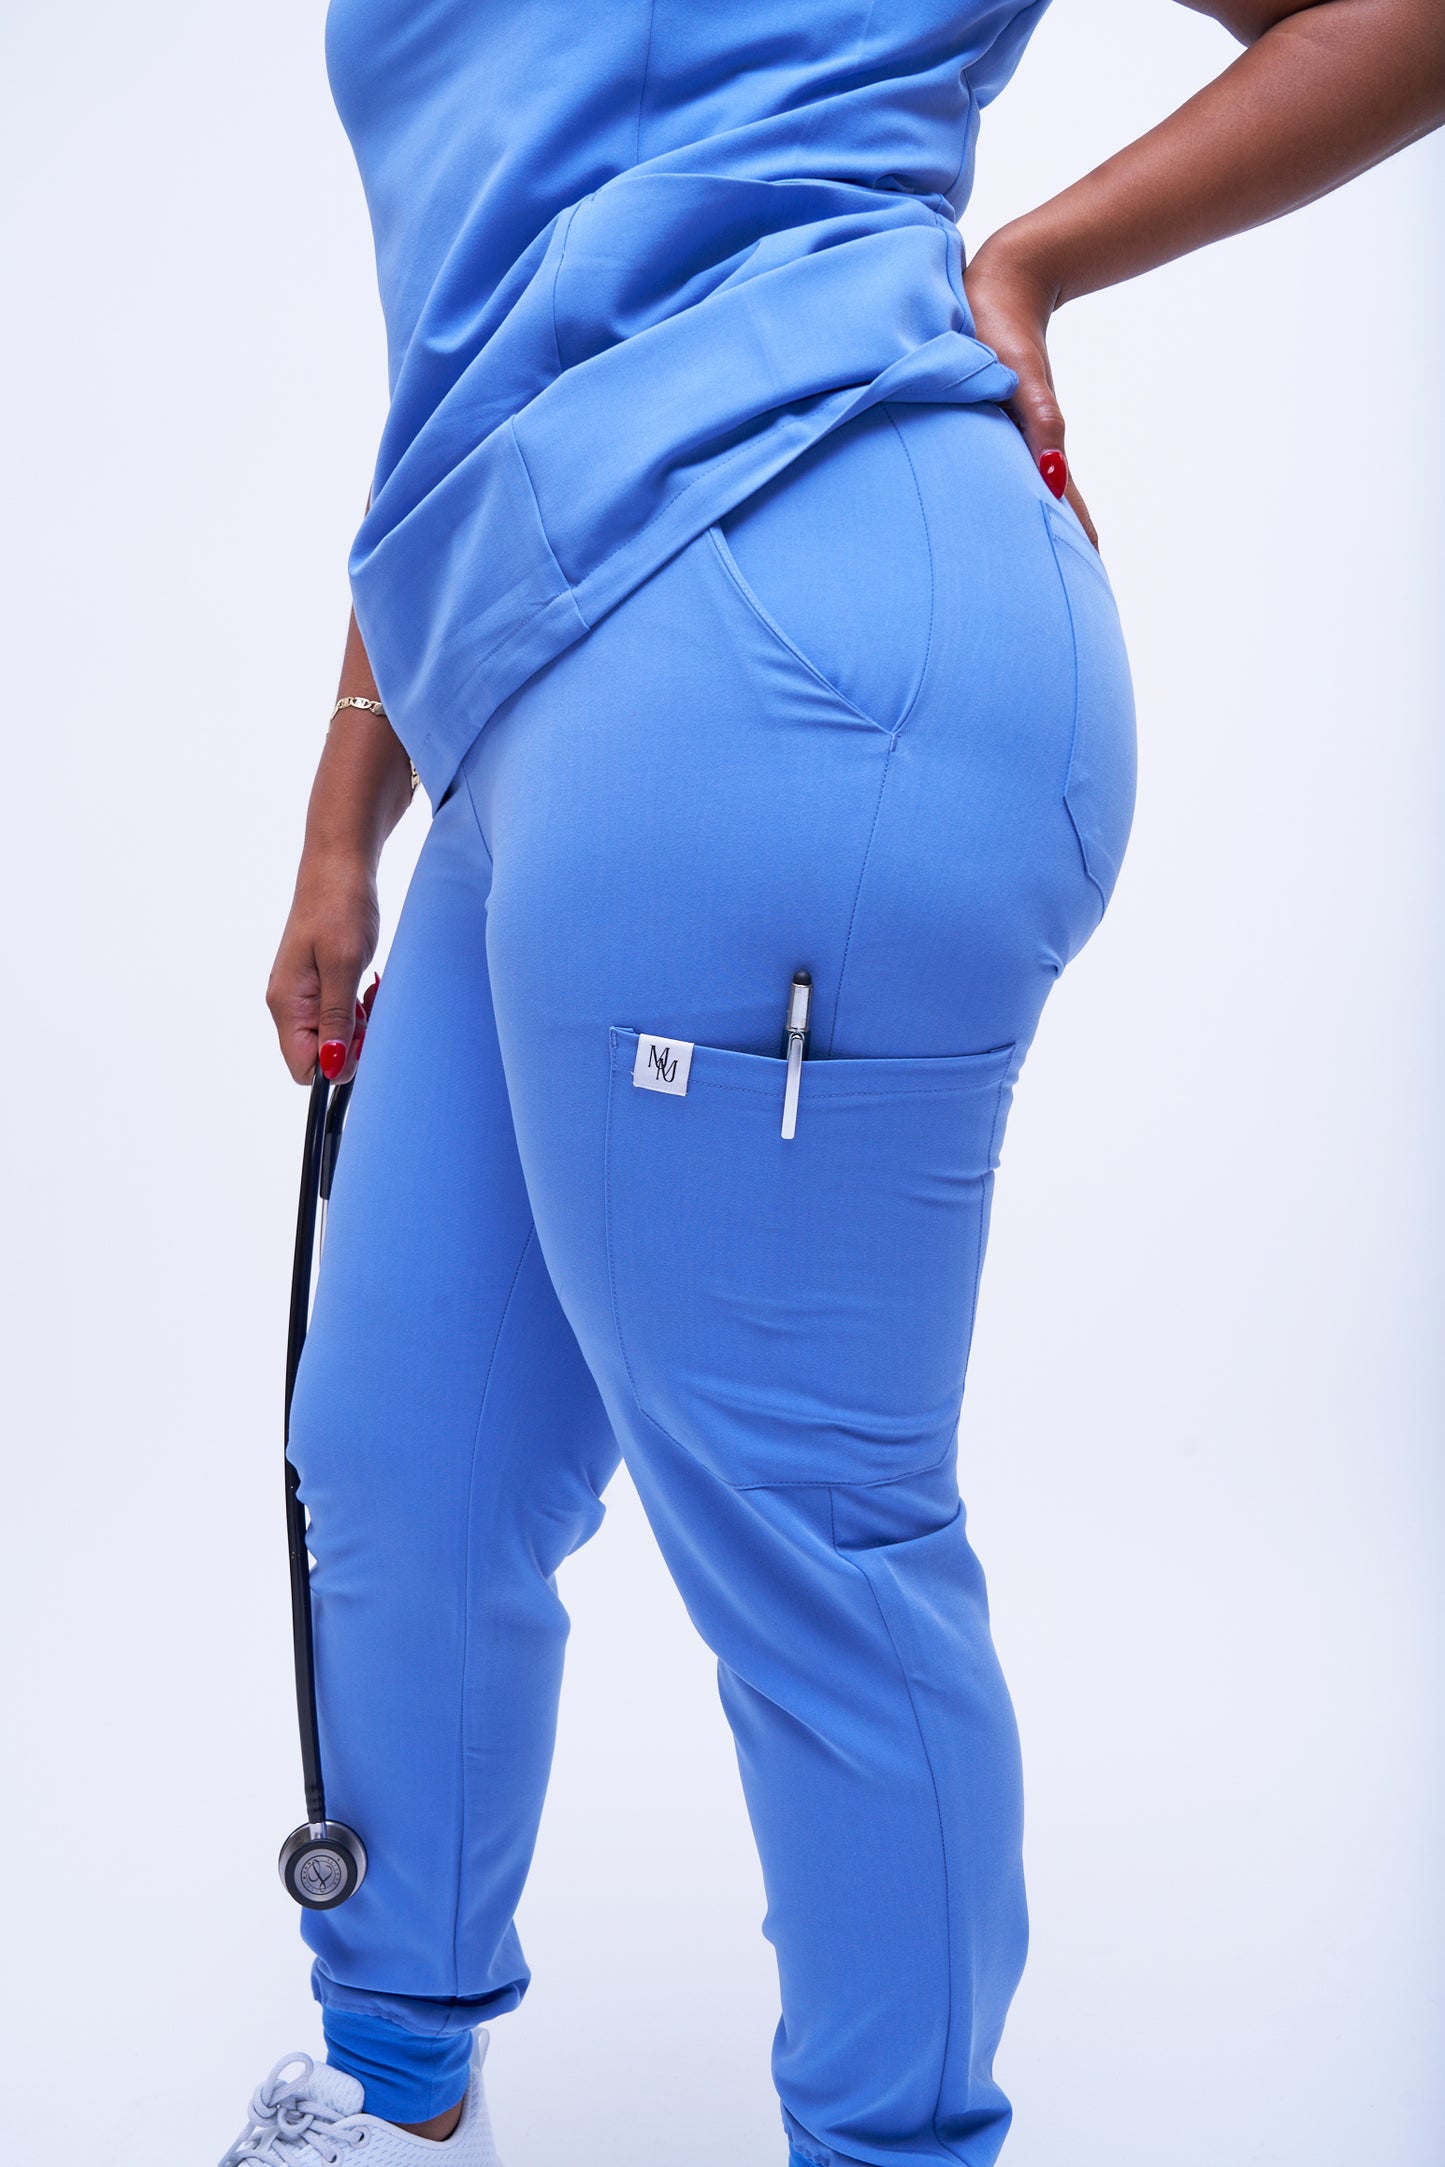 mary-c-six-pocket-ceil-blue-jogger-scrub-pants-434